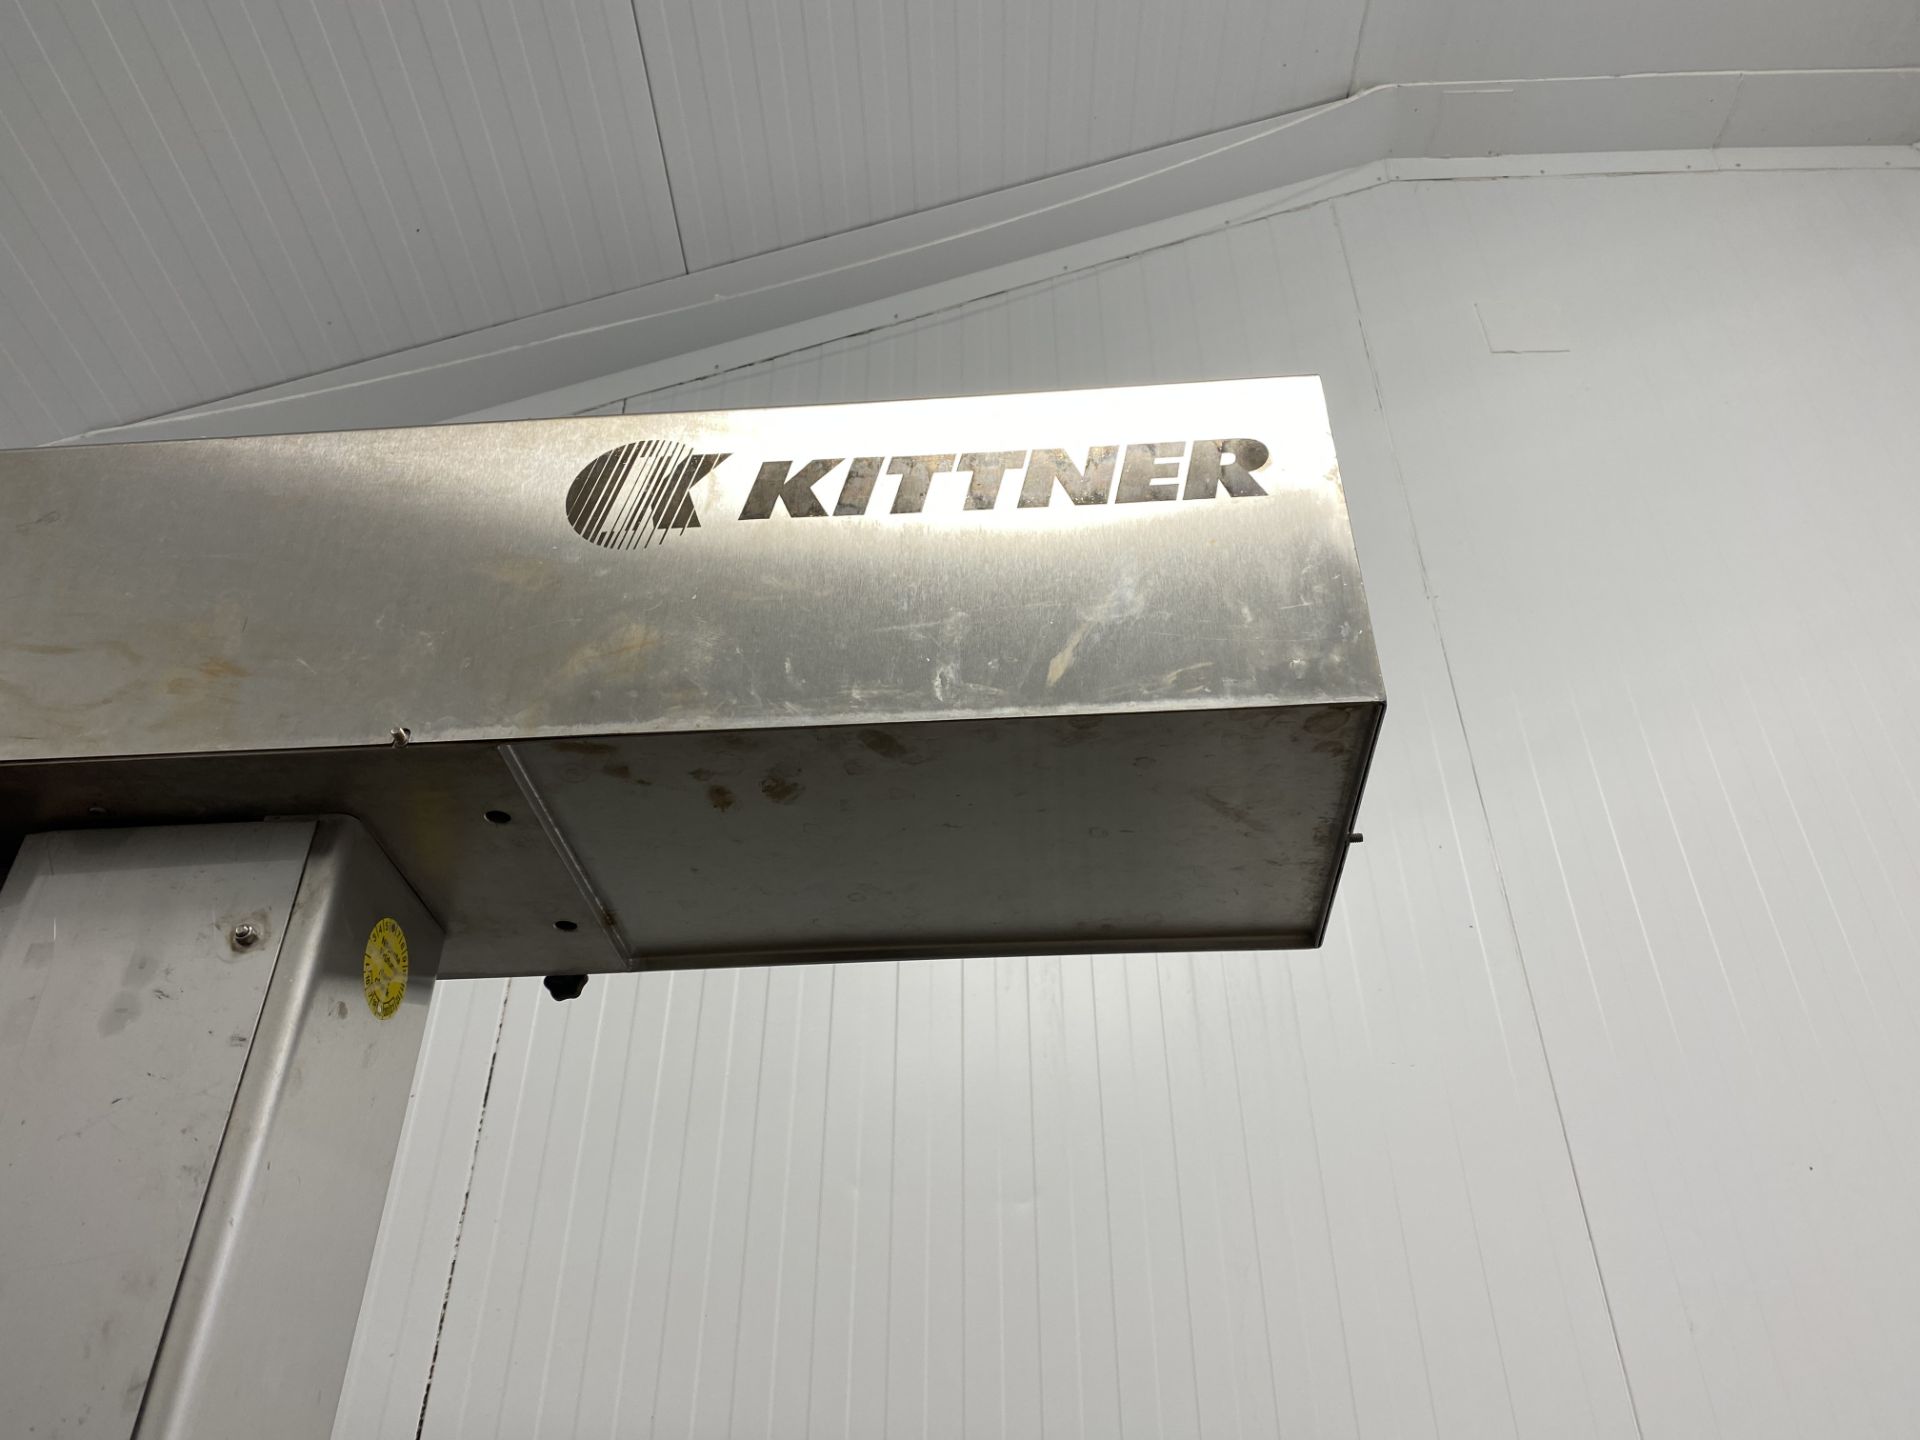 2 Kittner waste bin lifts , ART no 2421102, SN (1) - Image 5 of 11